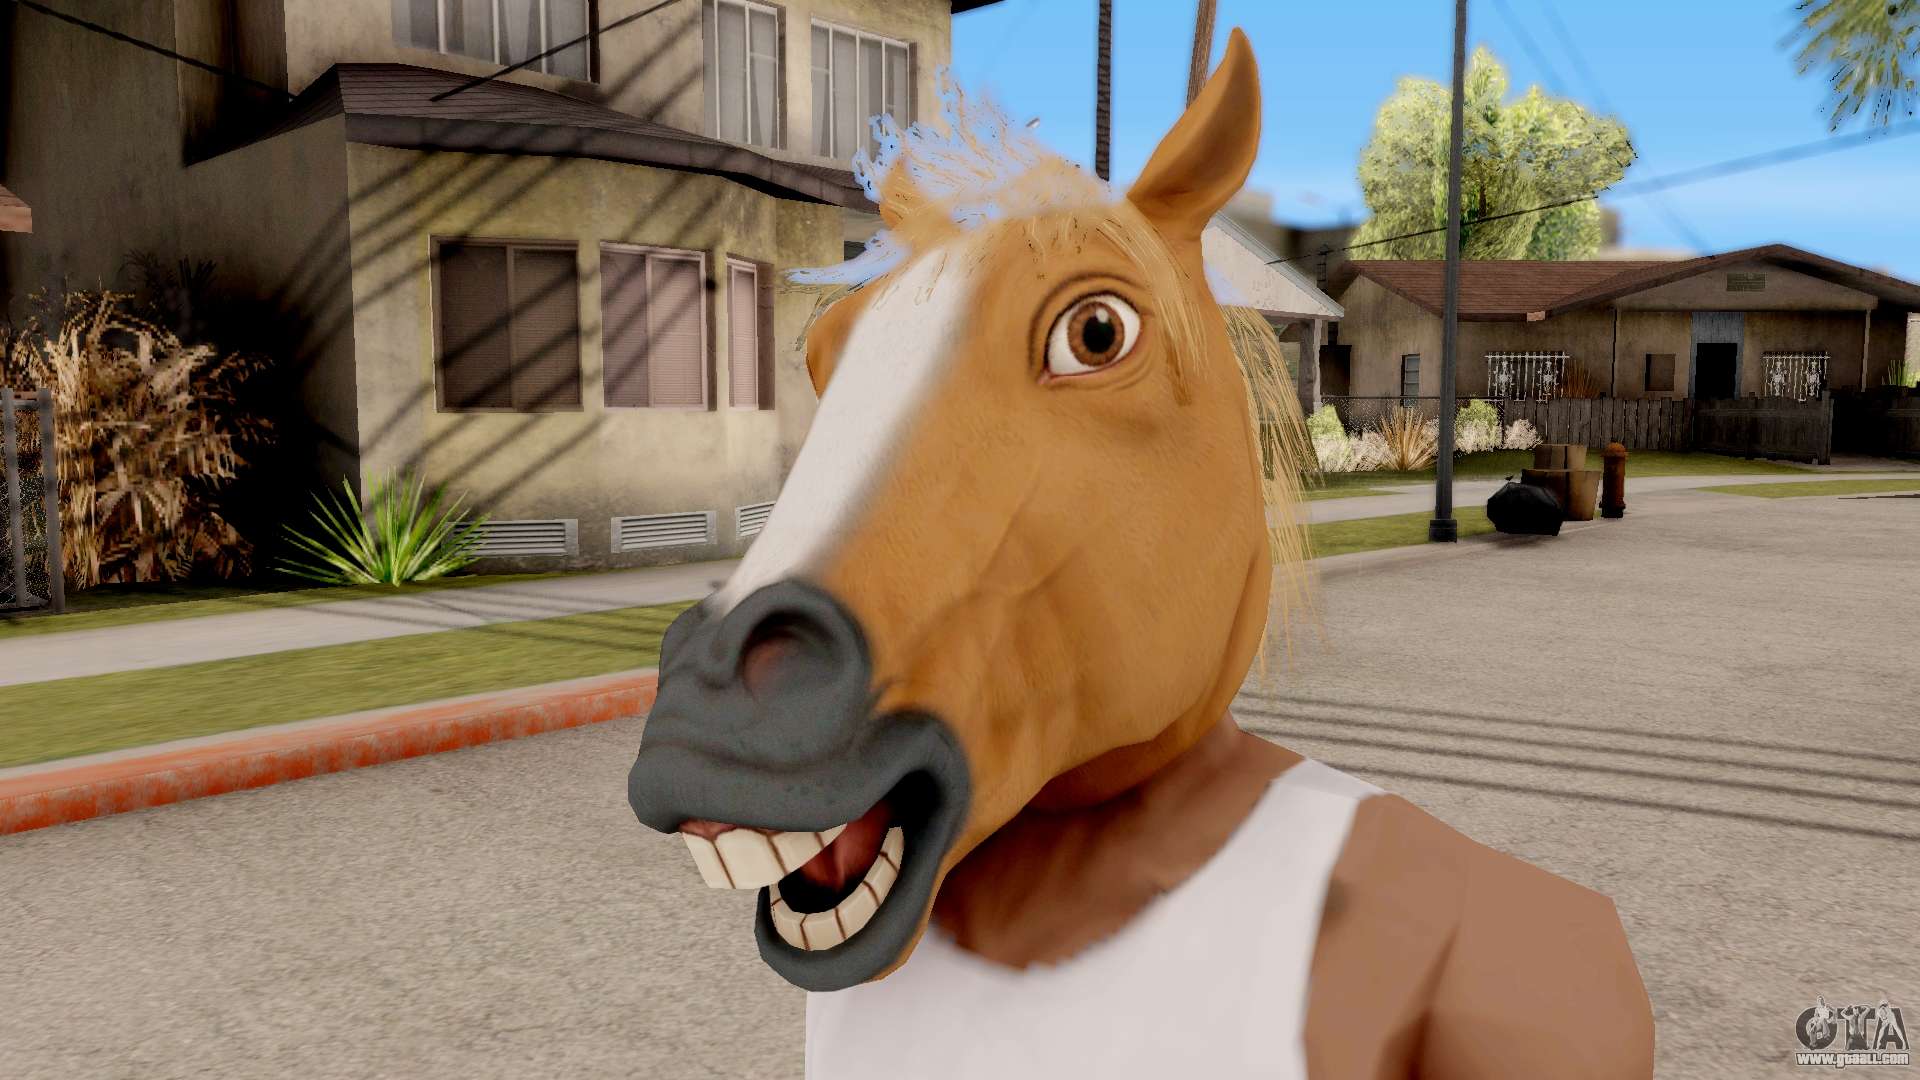 Mask Horse for GTA San Andreas